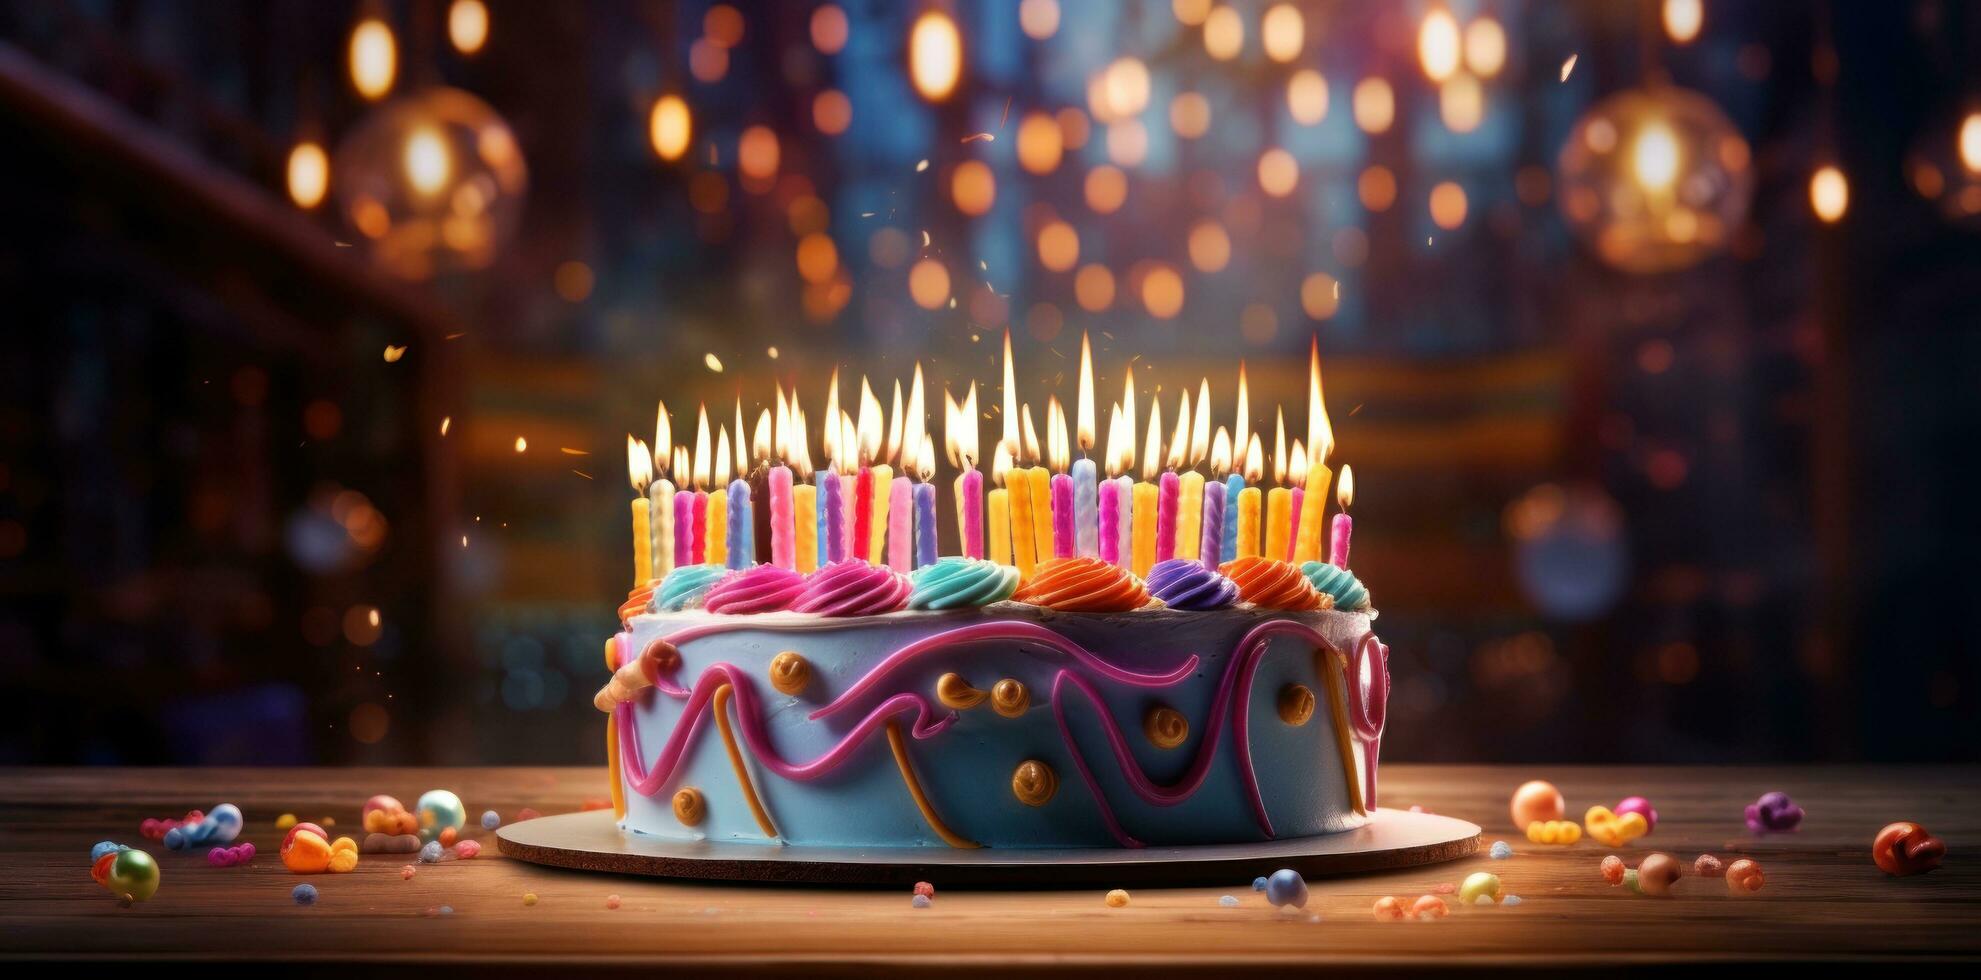 Vivid Birthday Cake background photo